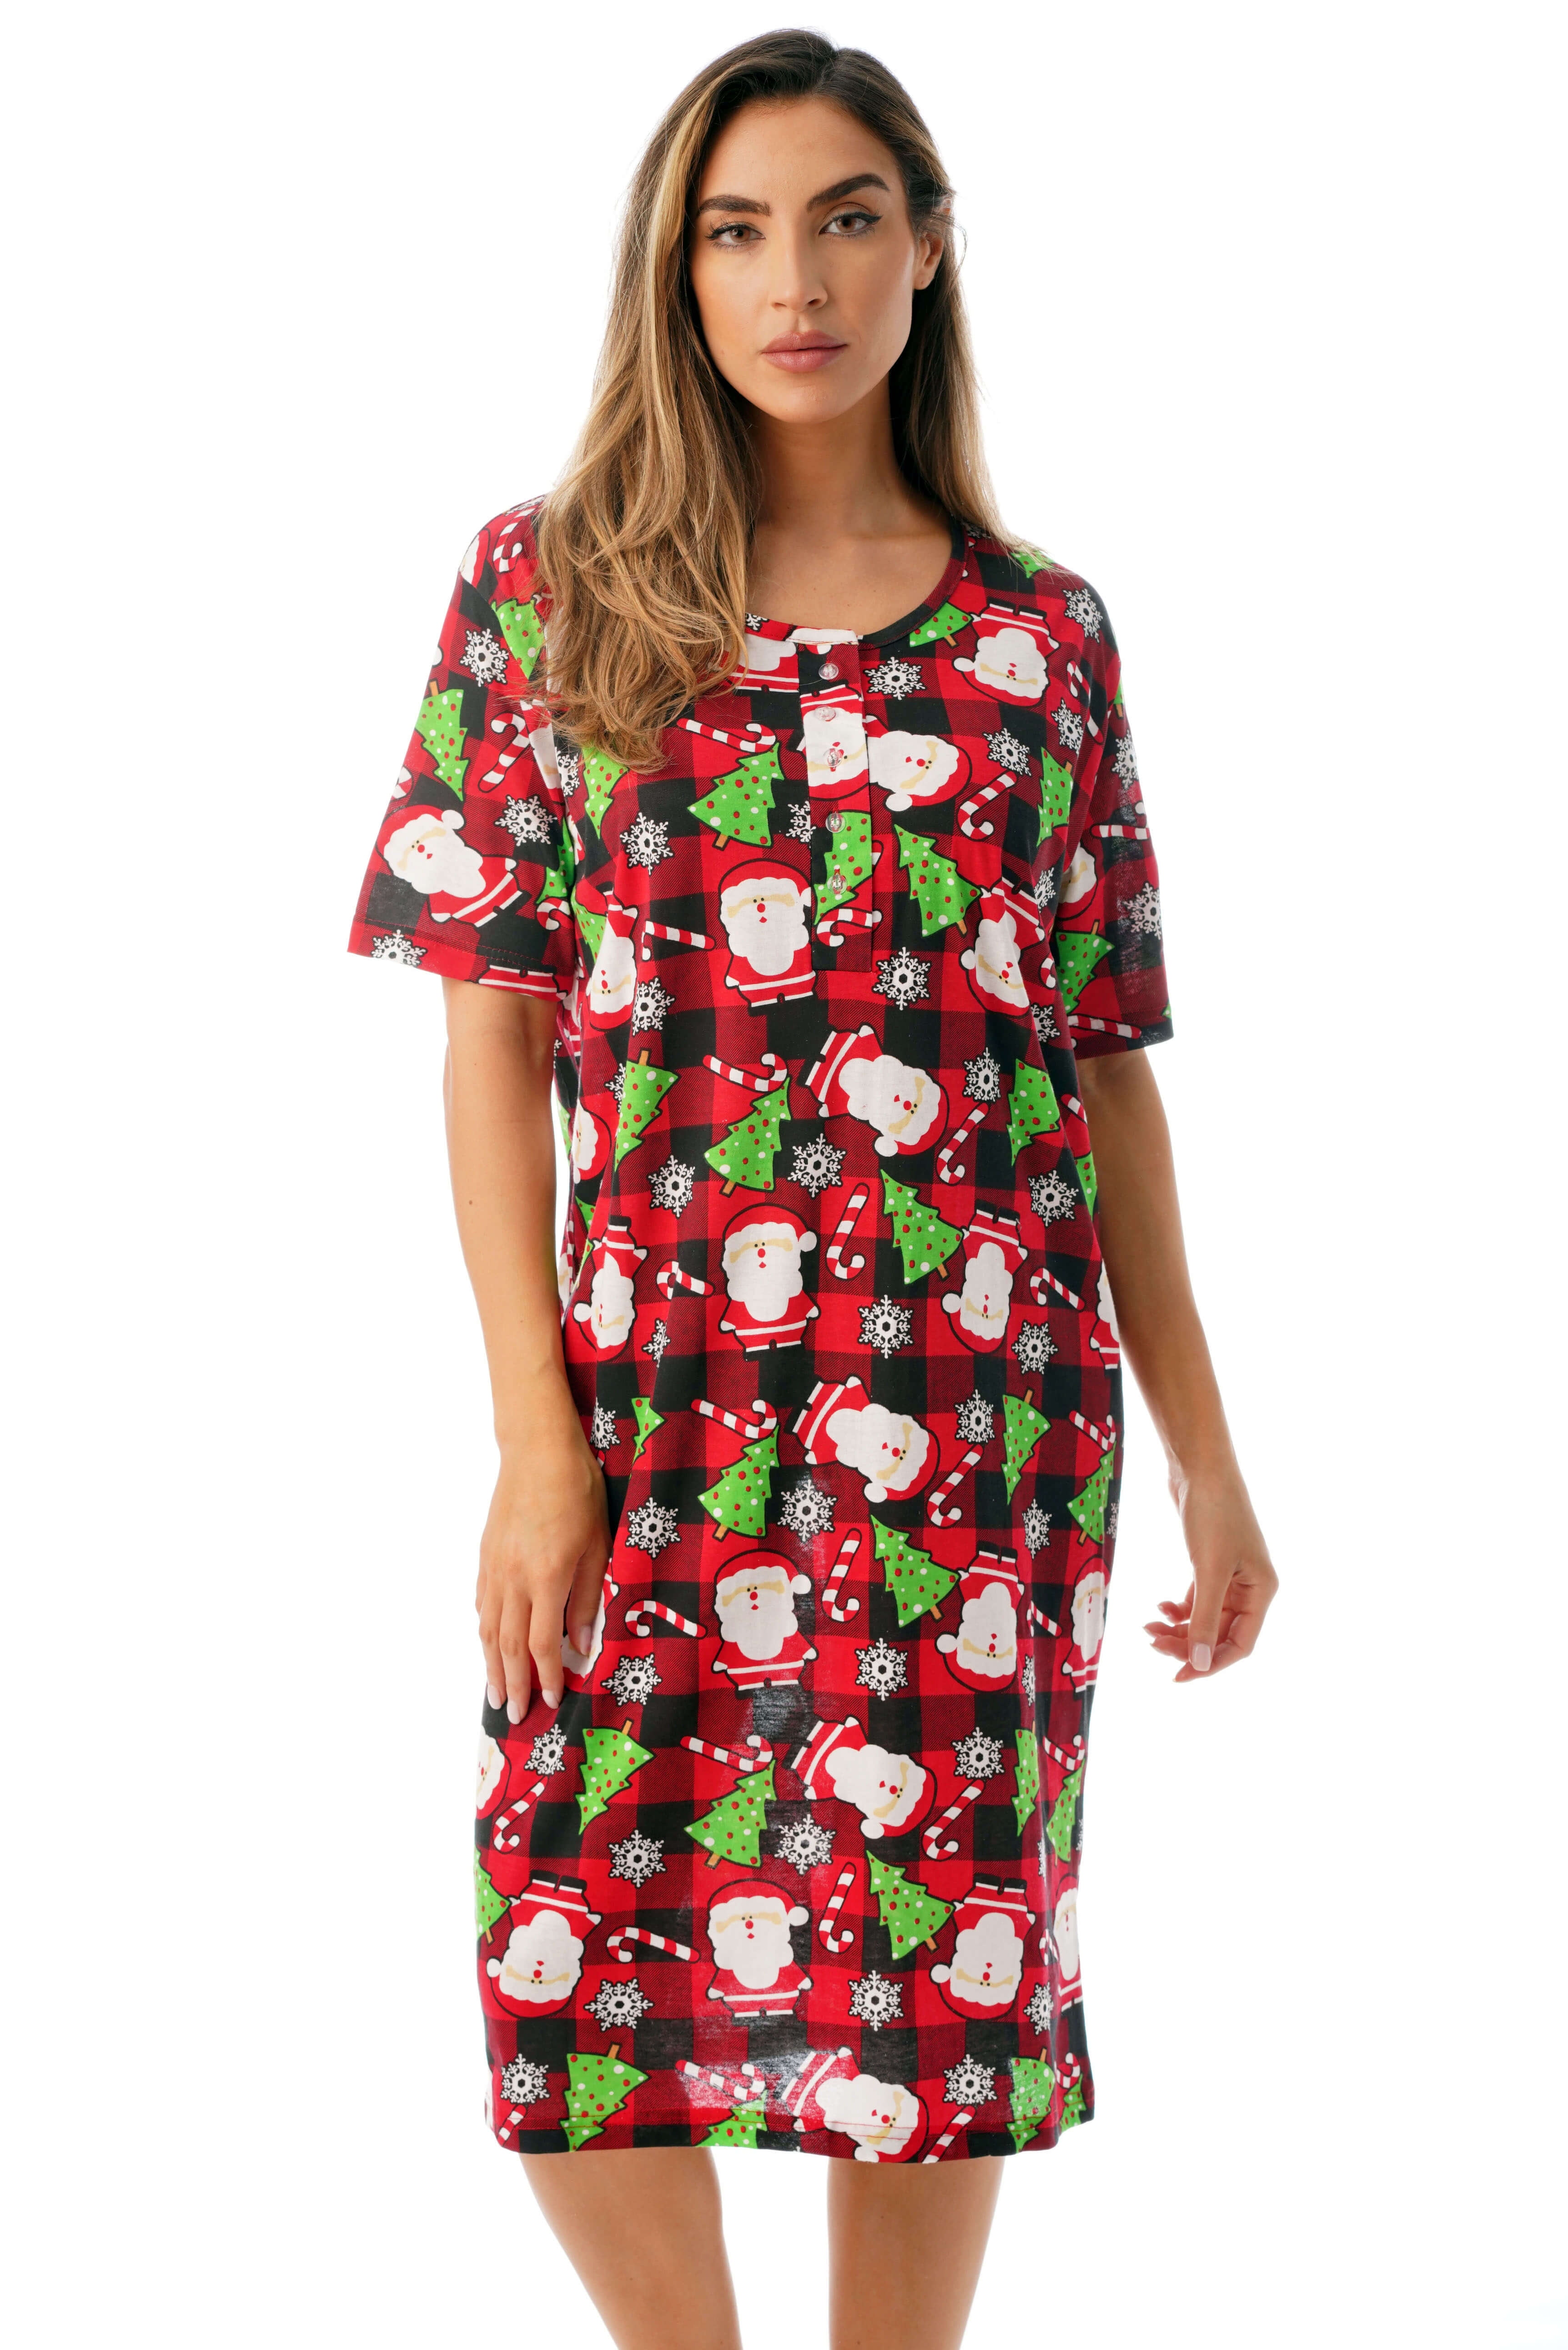 Just Love 4360 10005 S Just Love Short Sleeve Nightgown Sleep Dress For Women Sleepwear 